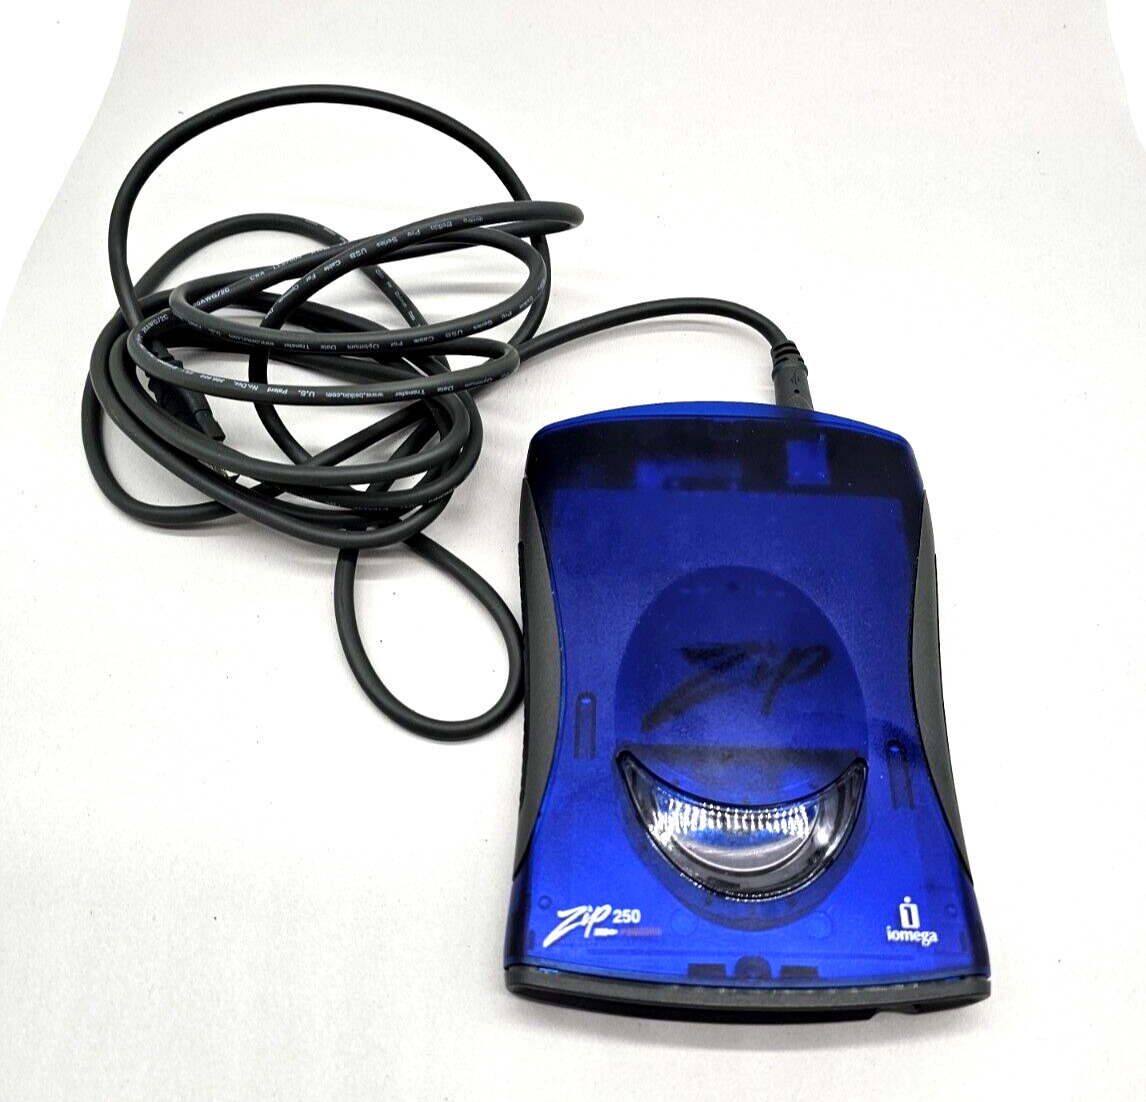 Iomega Zip 250 250MB USB Drive Z250USBPCMBP USB Powered Blue